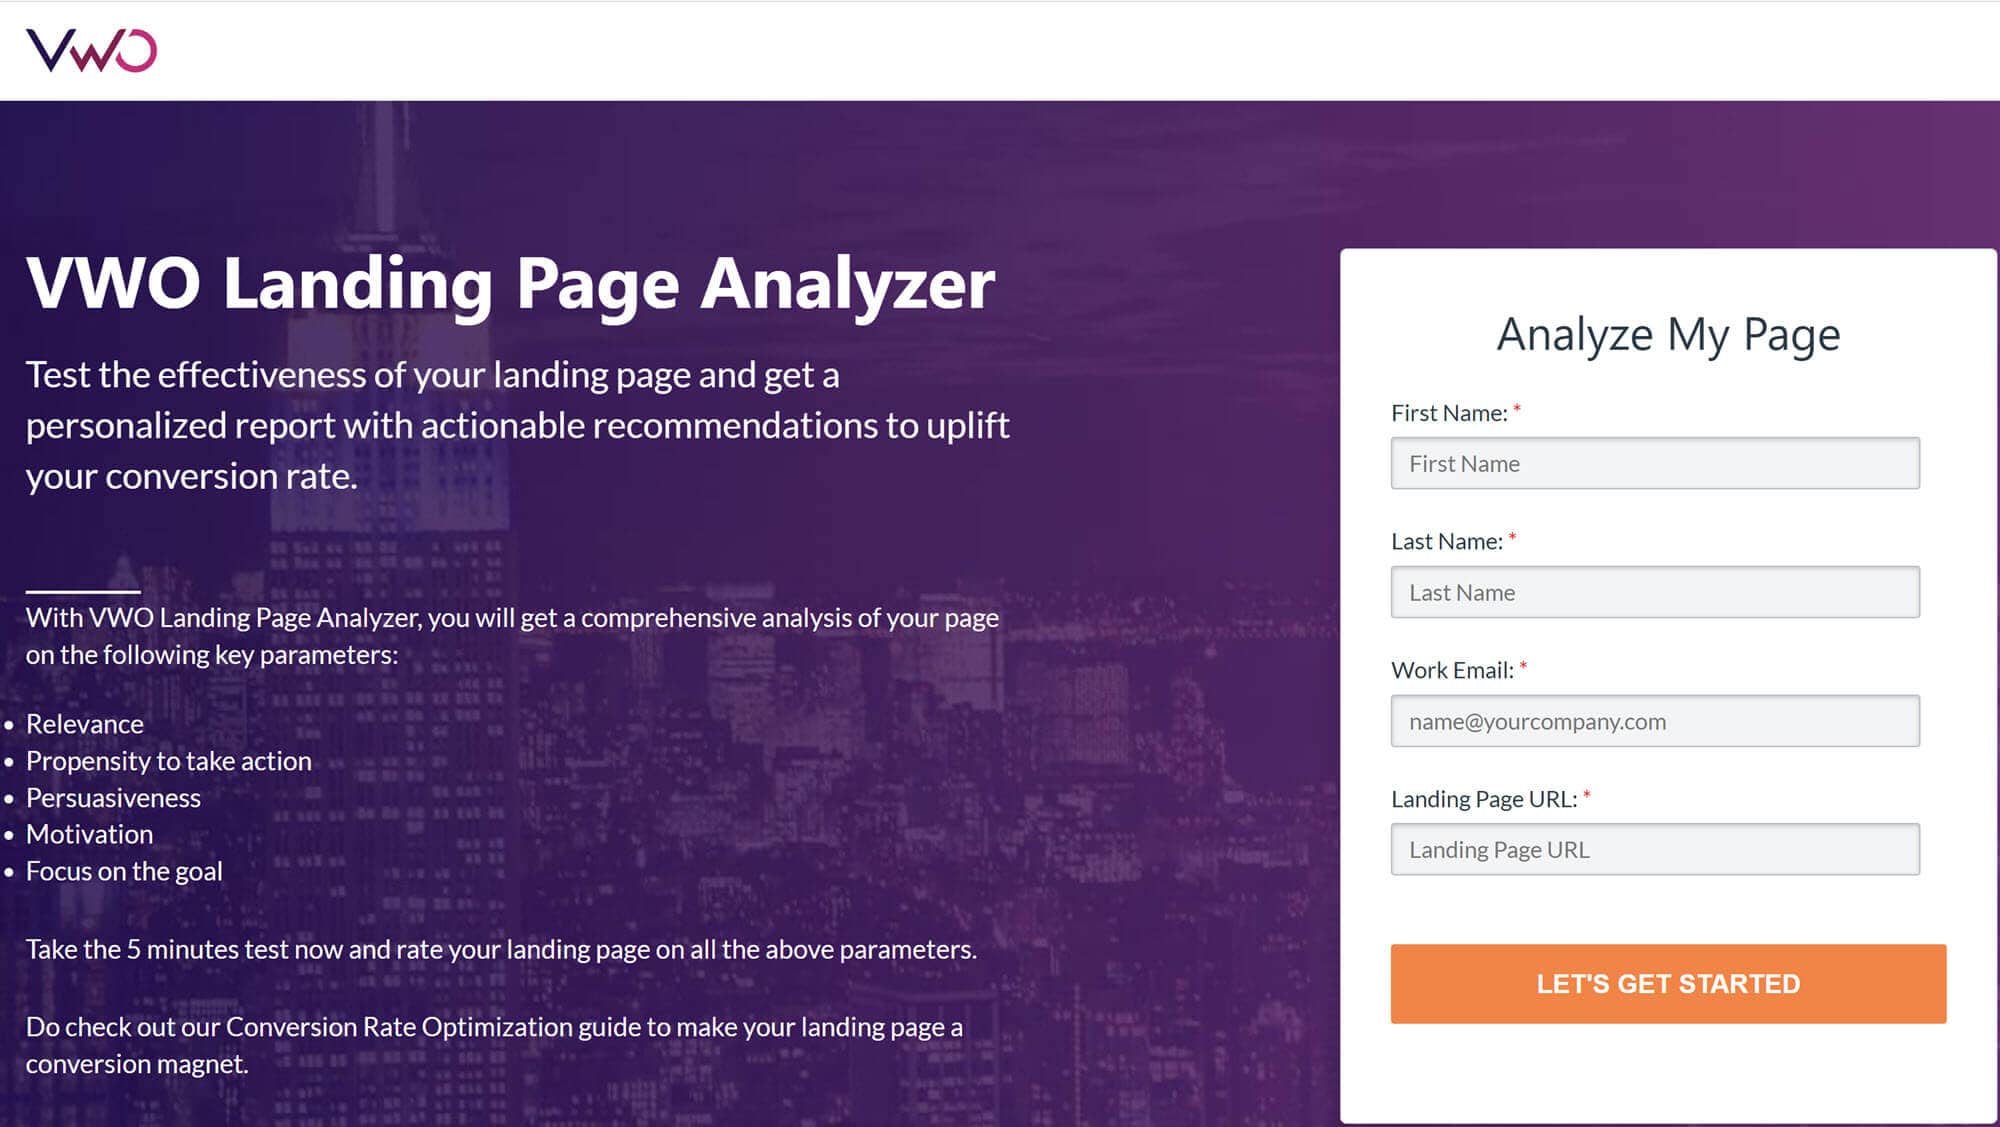 VWO landing page analyzer